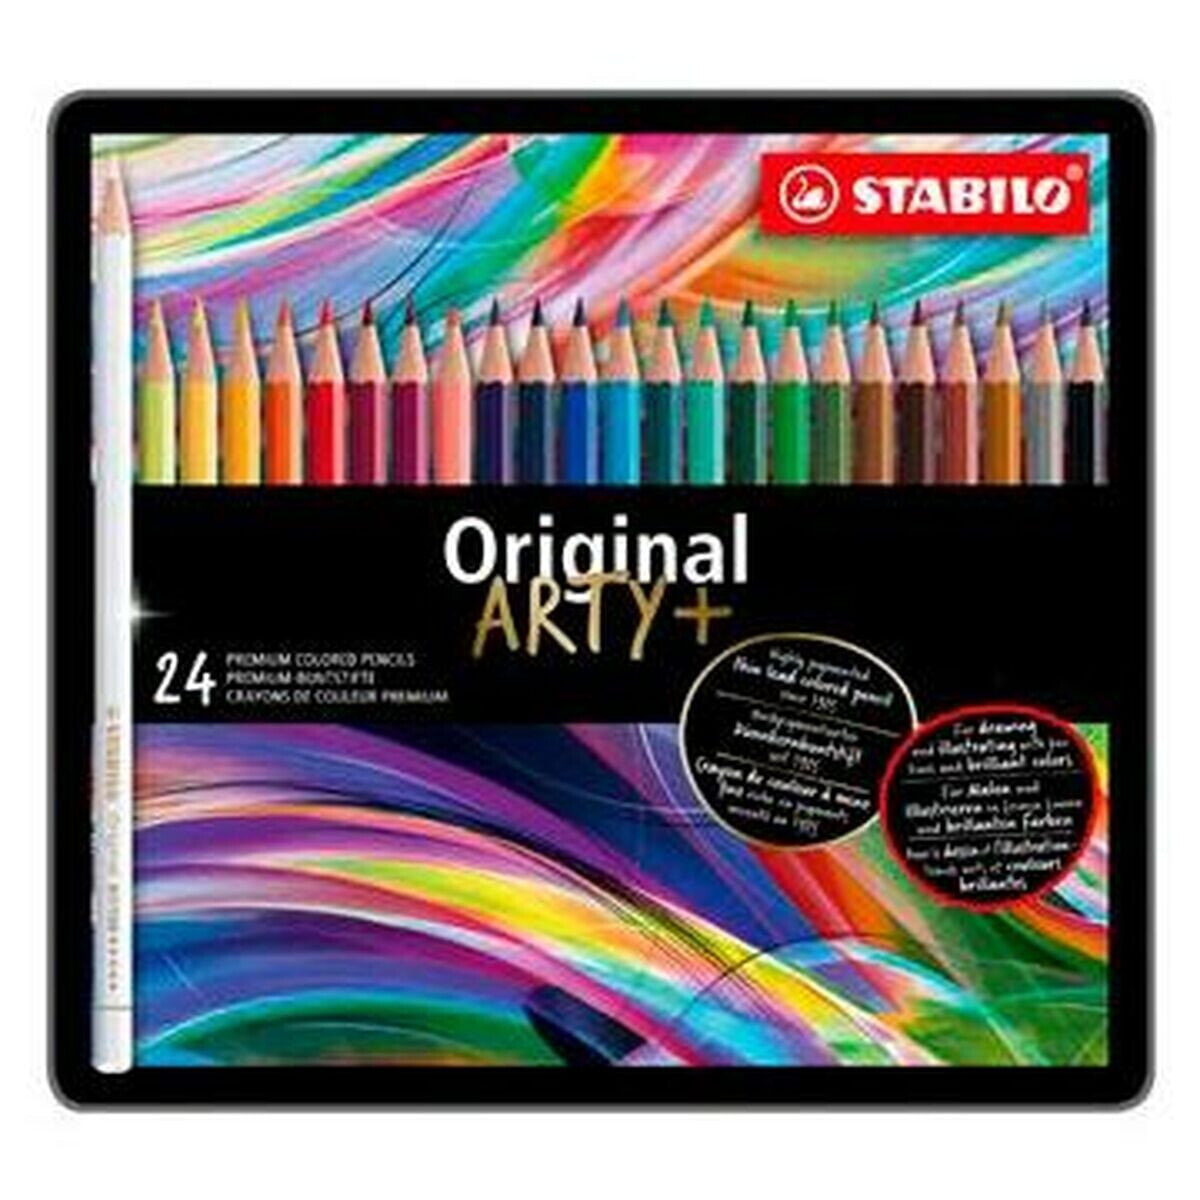 Colouring pencils Stabilo Original Multicolour 24 Pieces